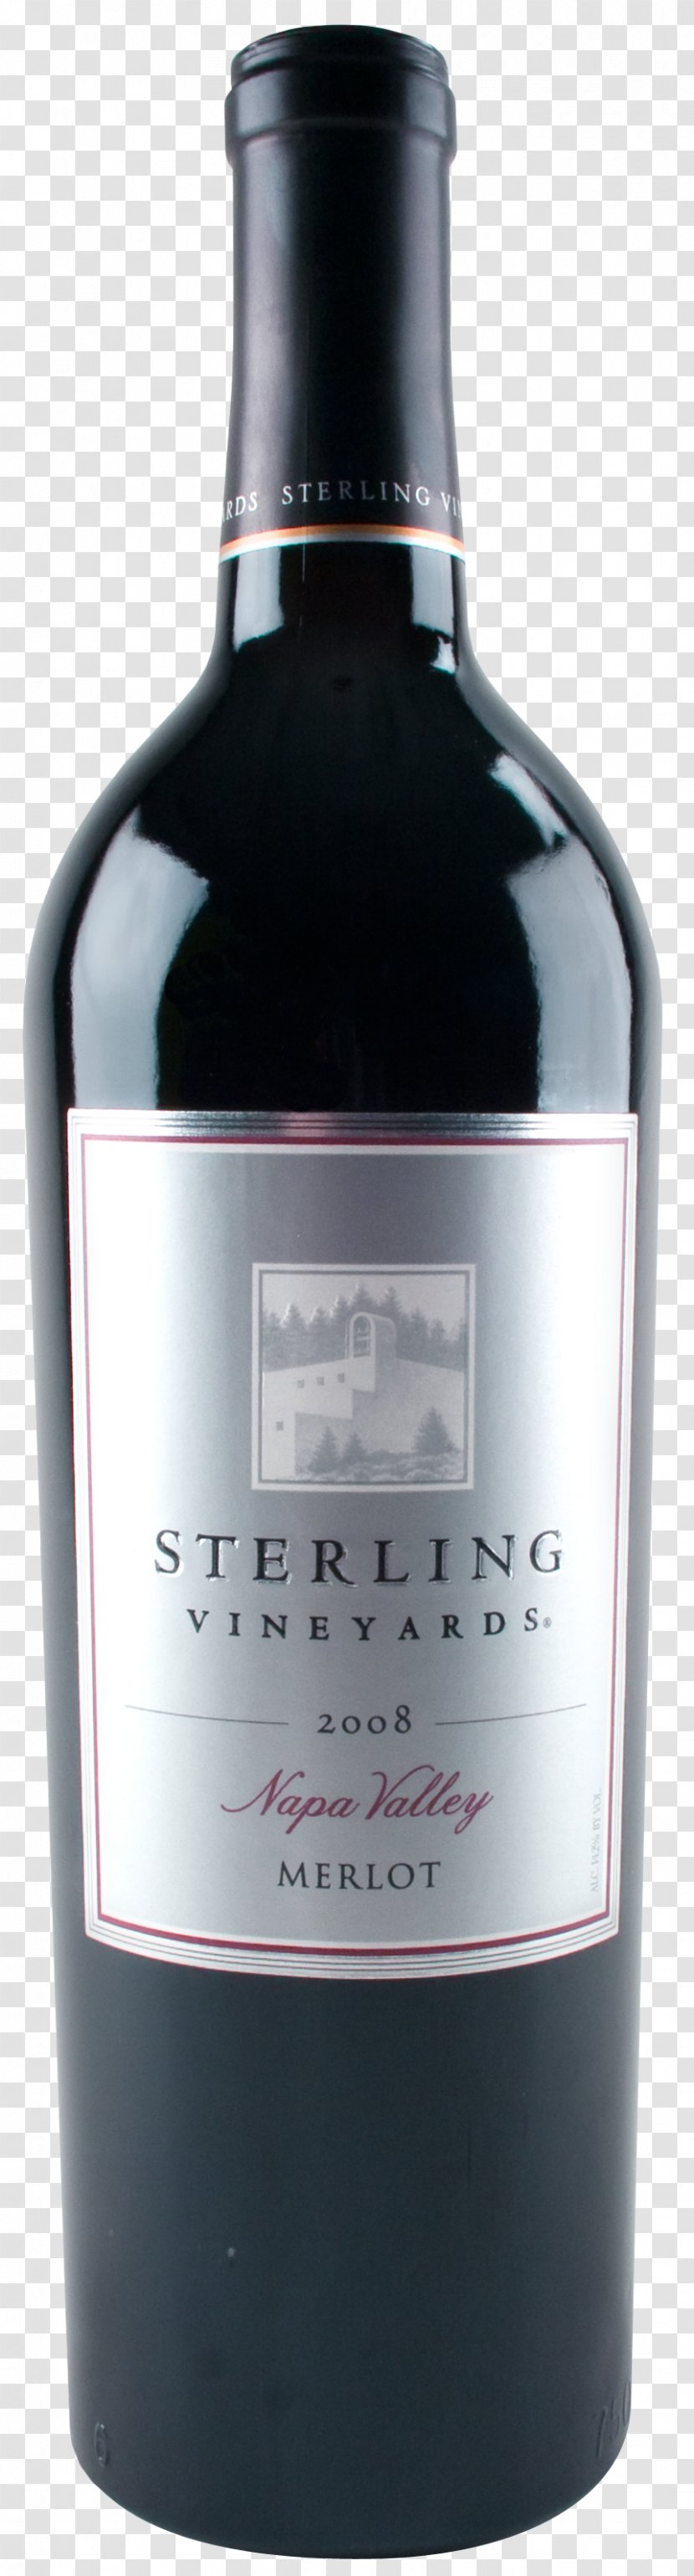 Cabernet Sauvignon Red Wine Merlot Franc - Tree - Sterling Champagne Bottle Stopper Transparent PNG